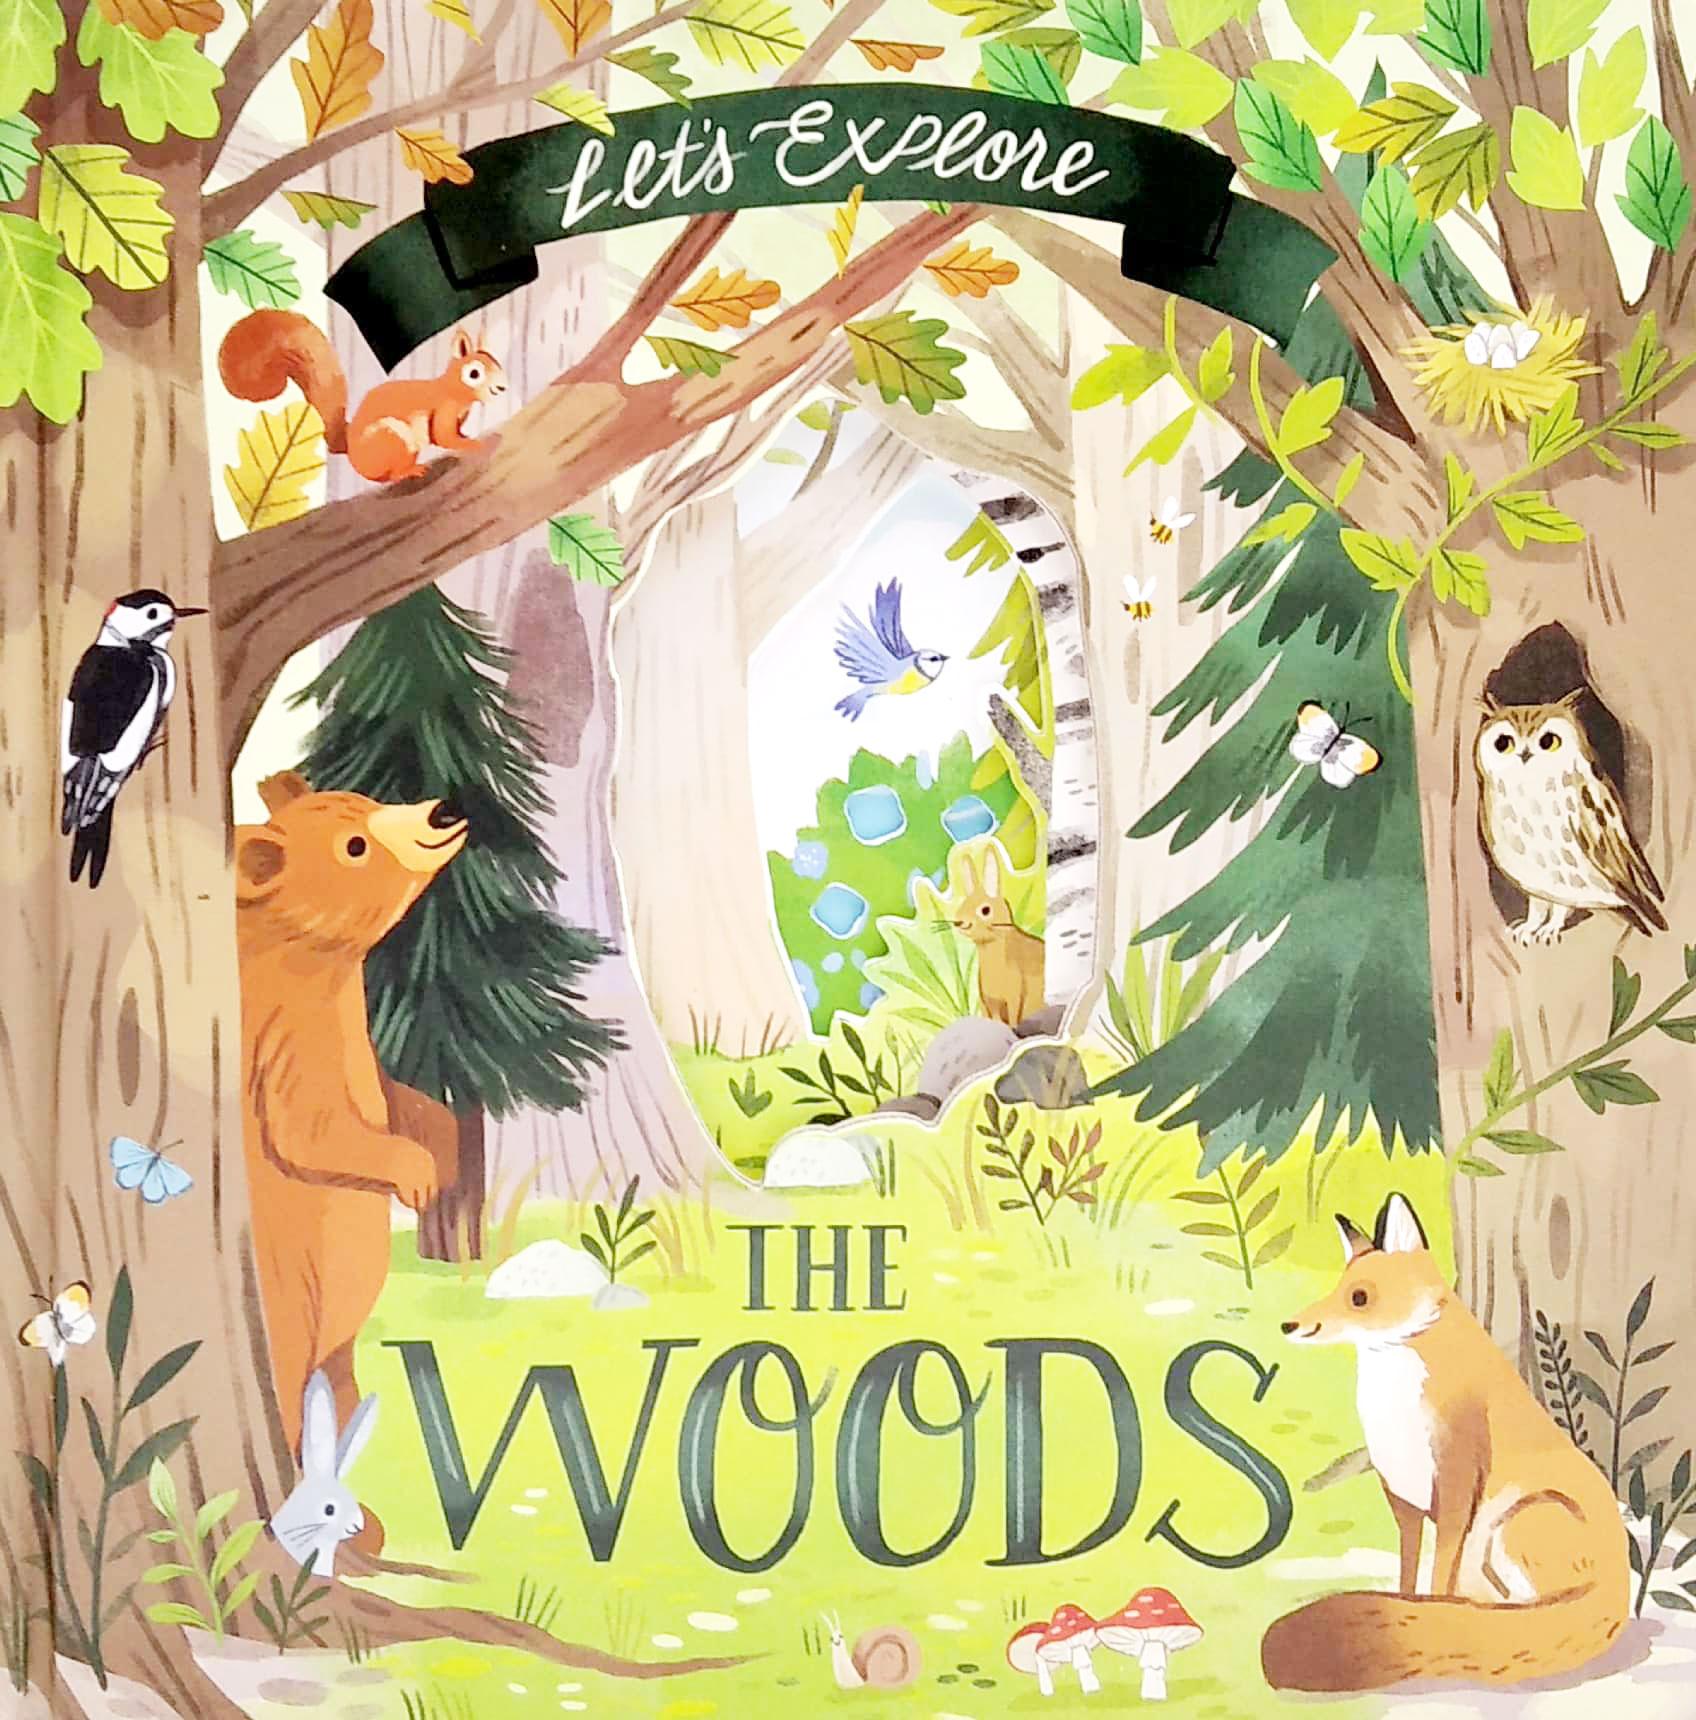 Nature Die-cut Book - Let's Explore! The Woods